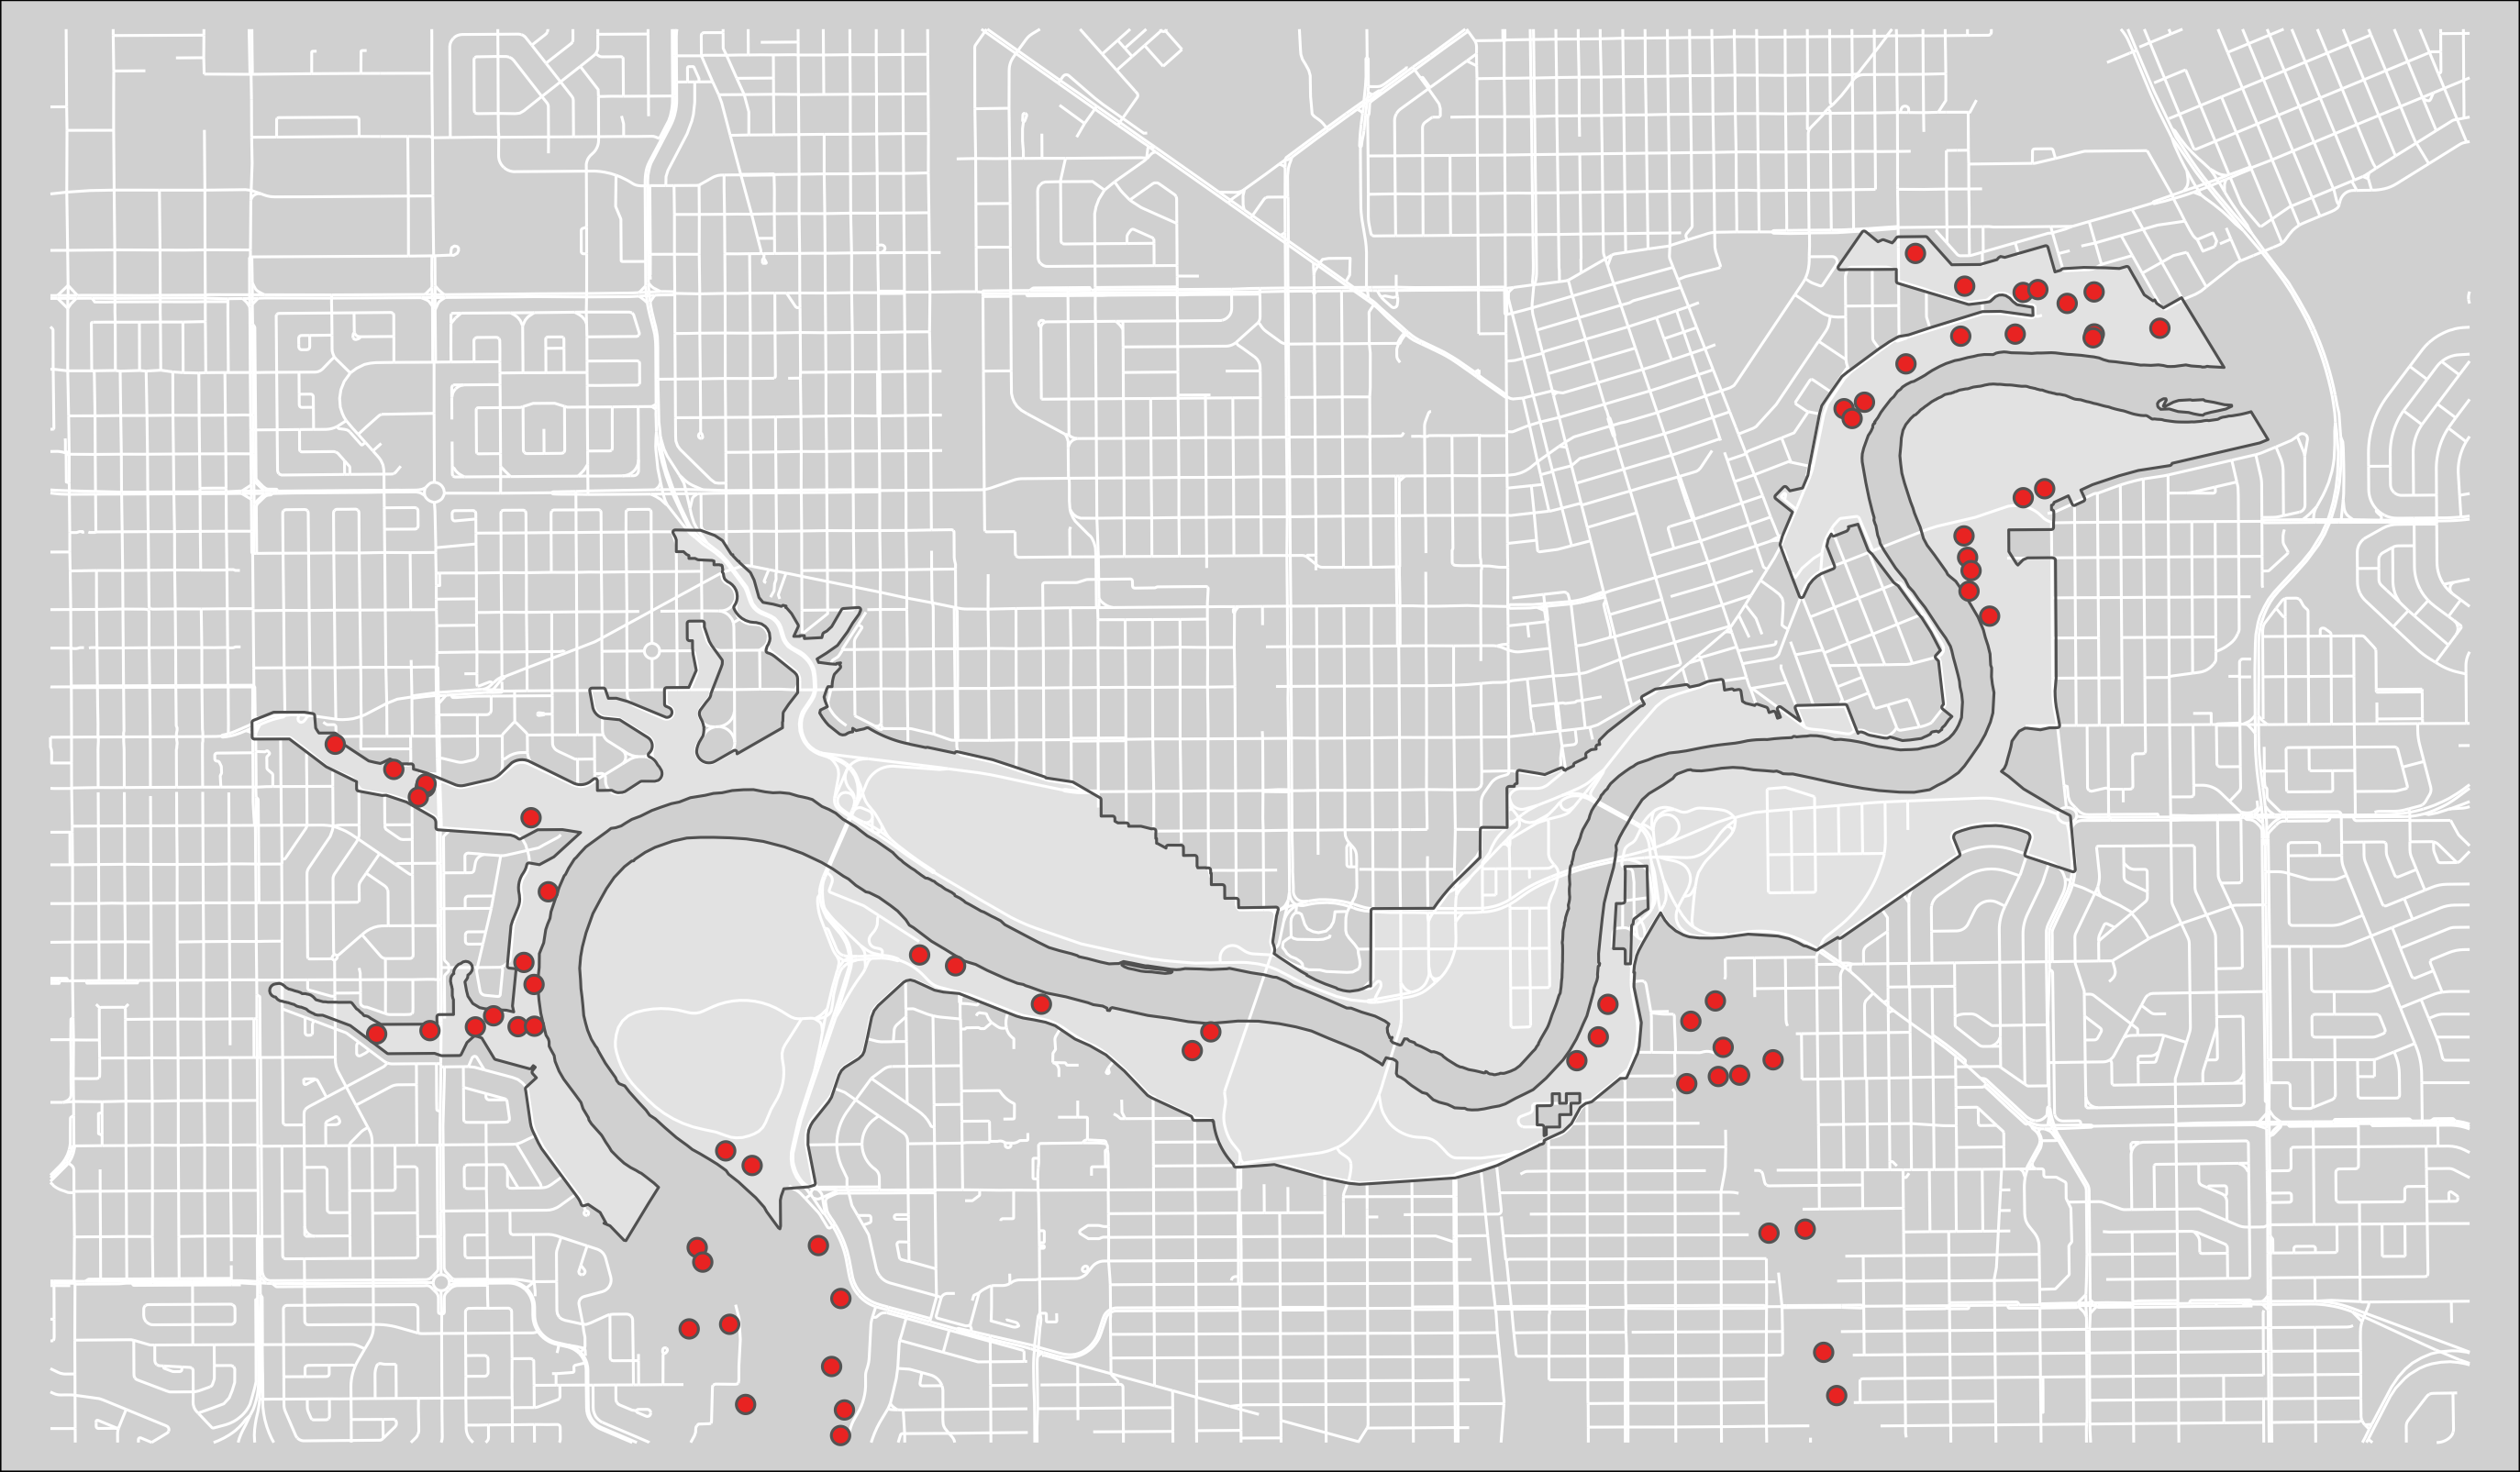 Edmonton sample plot locations.